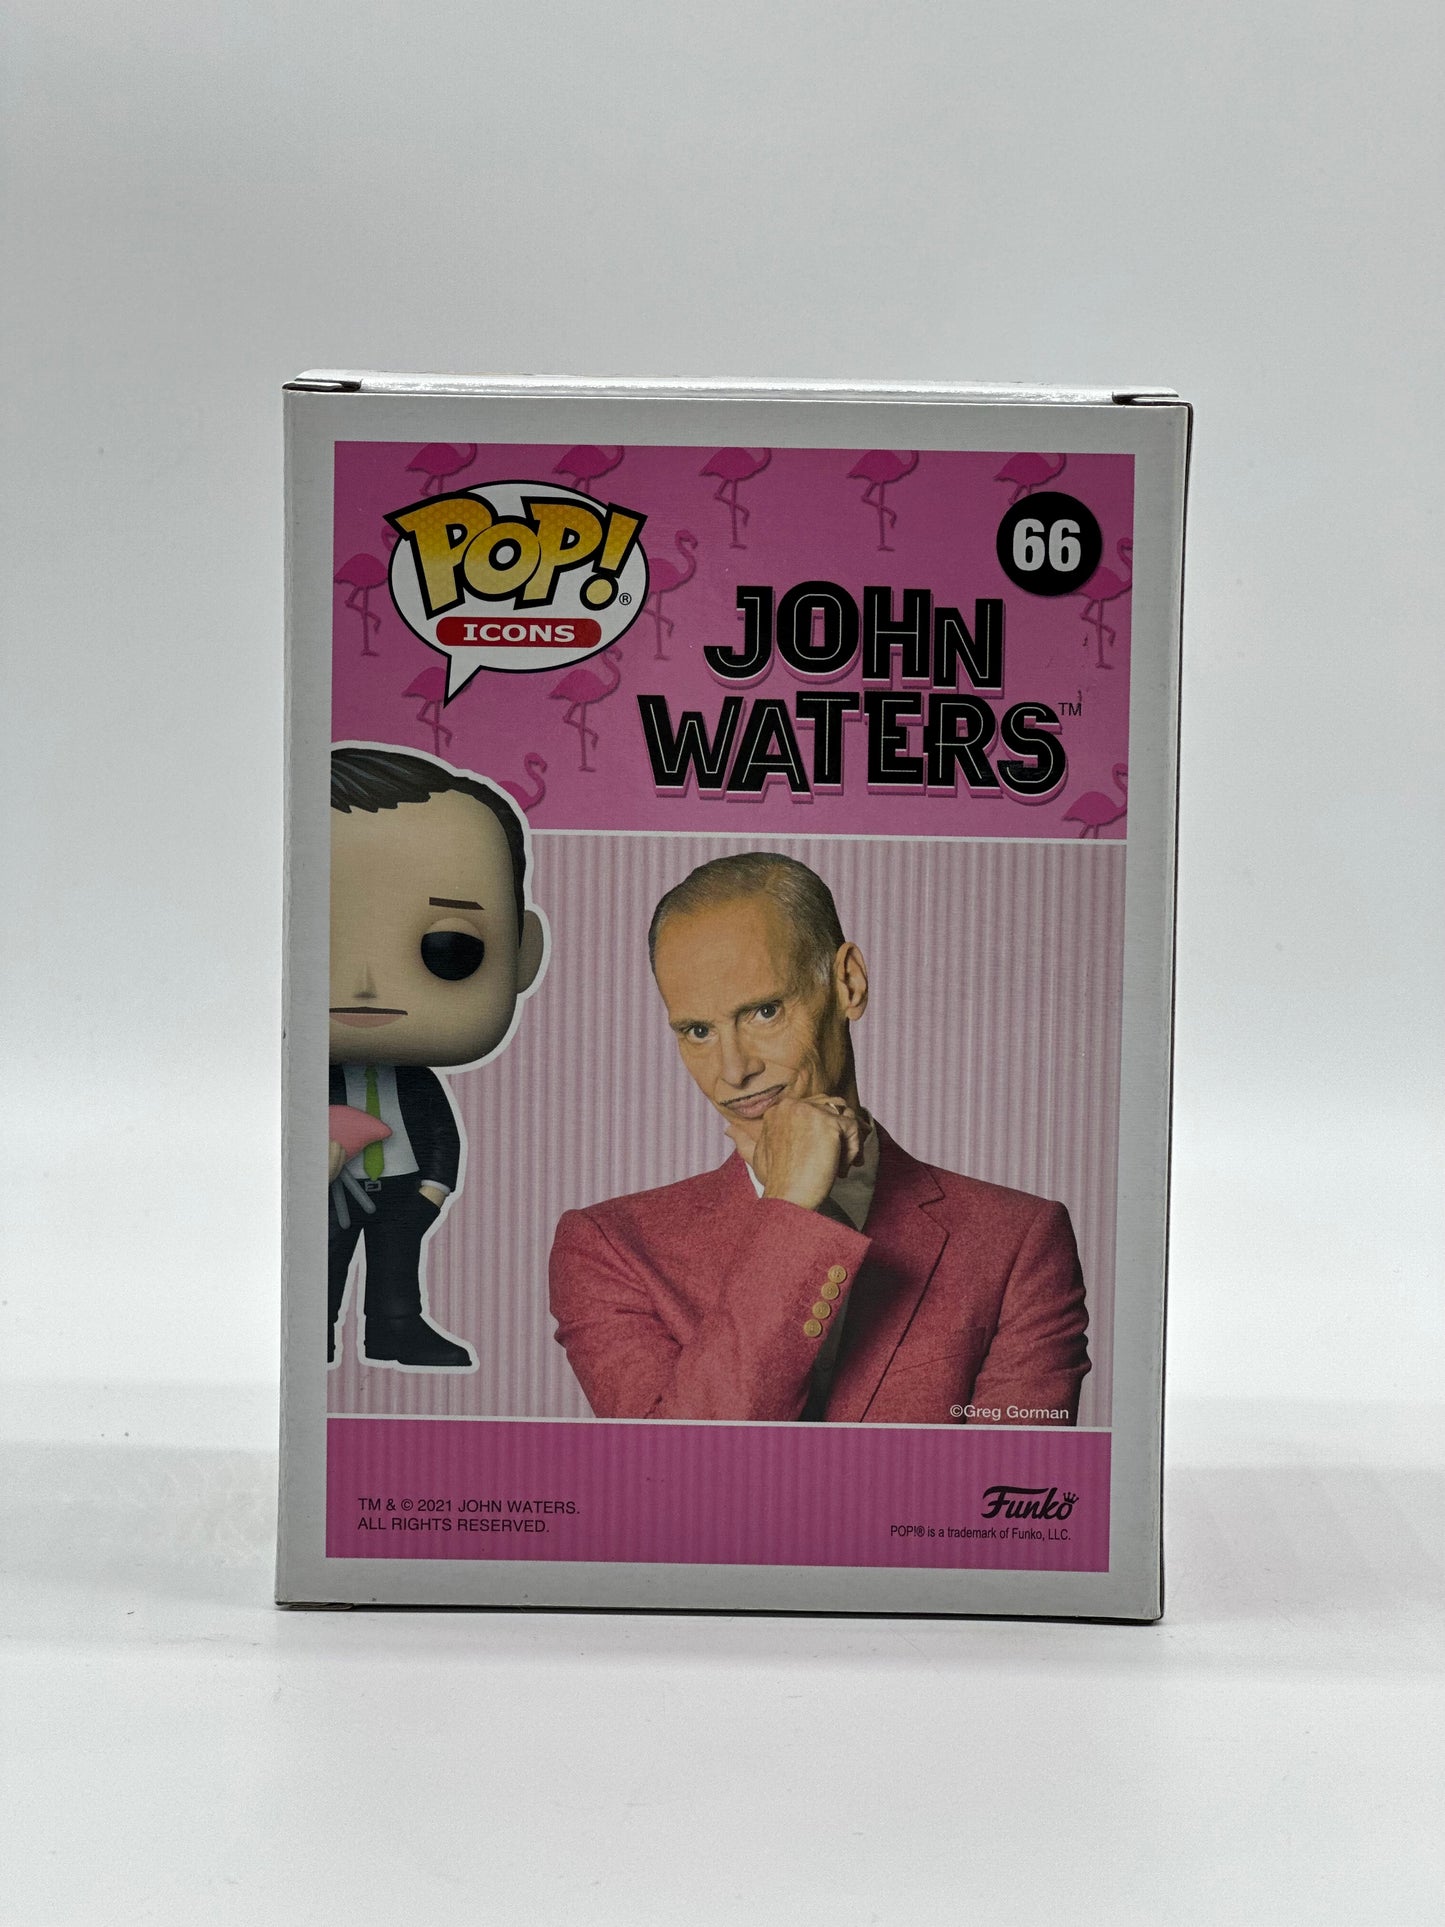 Pop! Icons John Waters 66 John Waters